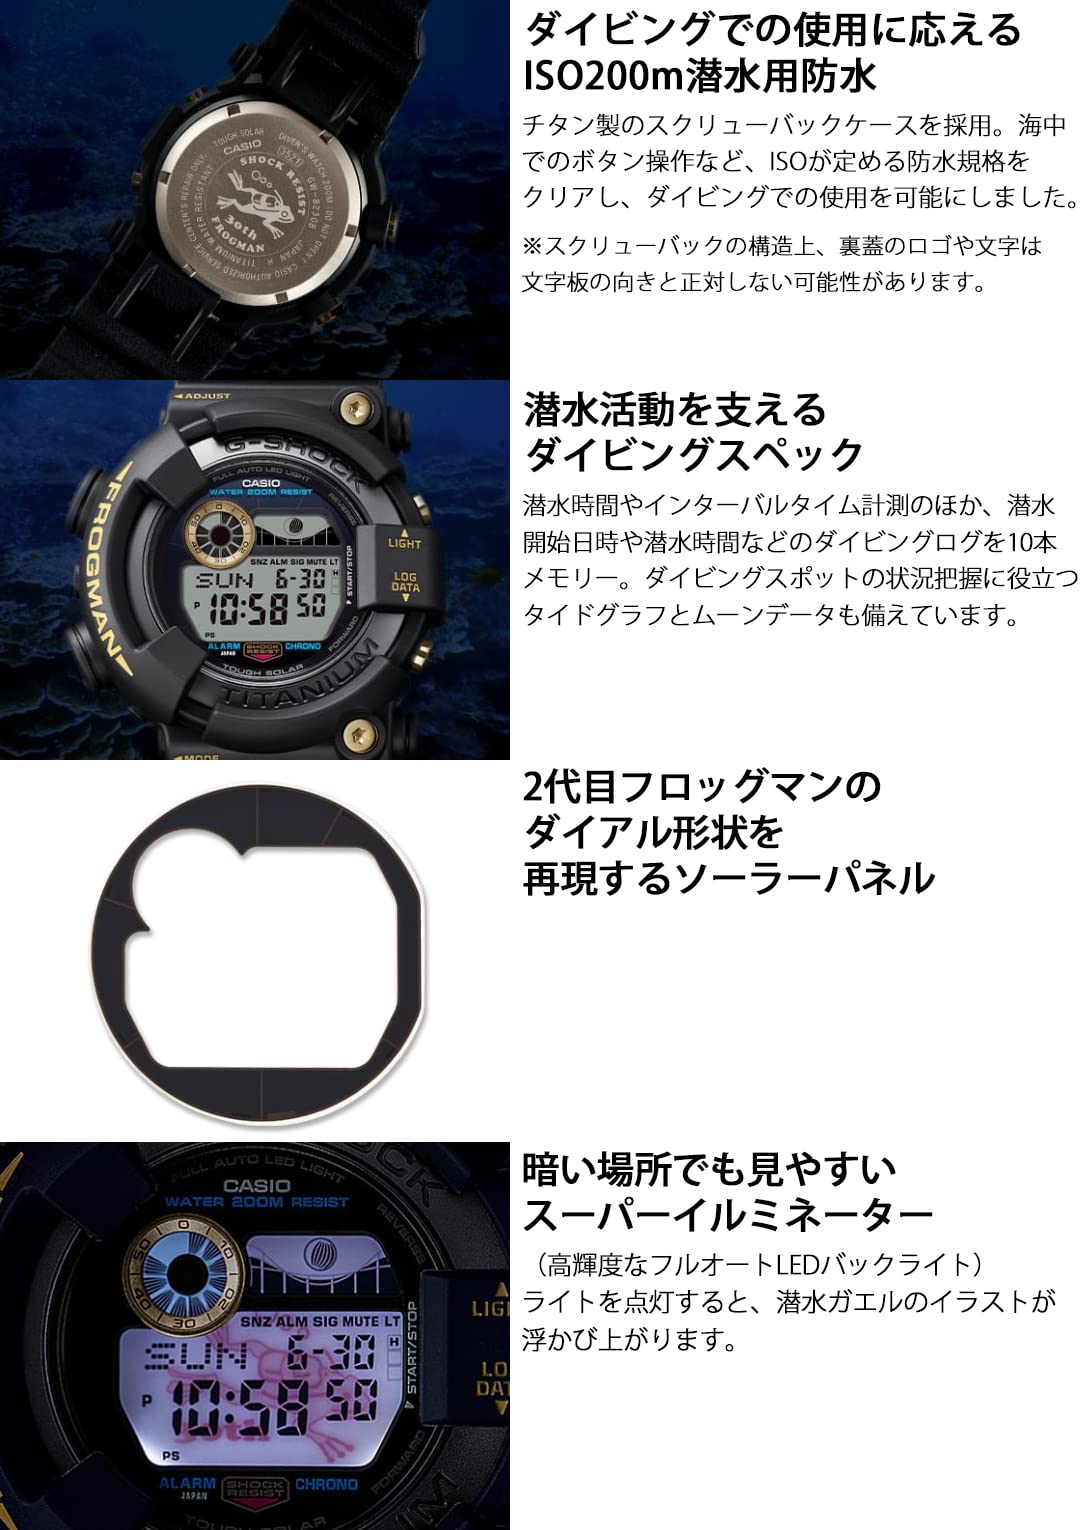 Casio G-Shock FROGMAN GW-8230B-9AJR 30th Limited Edition Solar Watch (Japan Domestic Genuine Products)